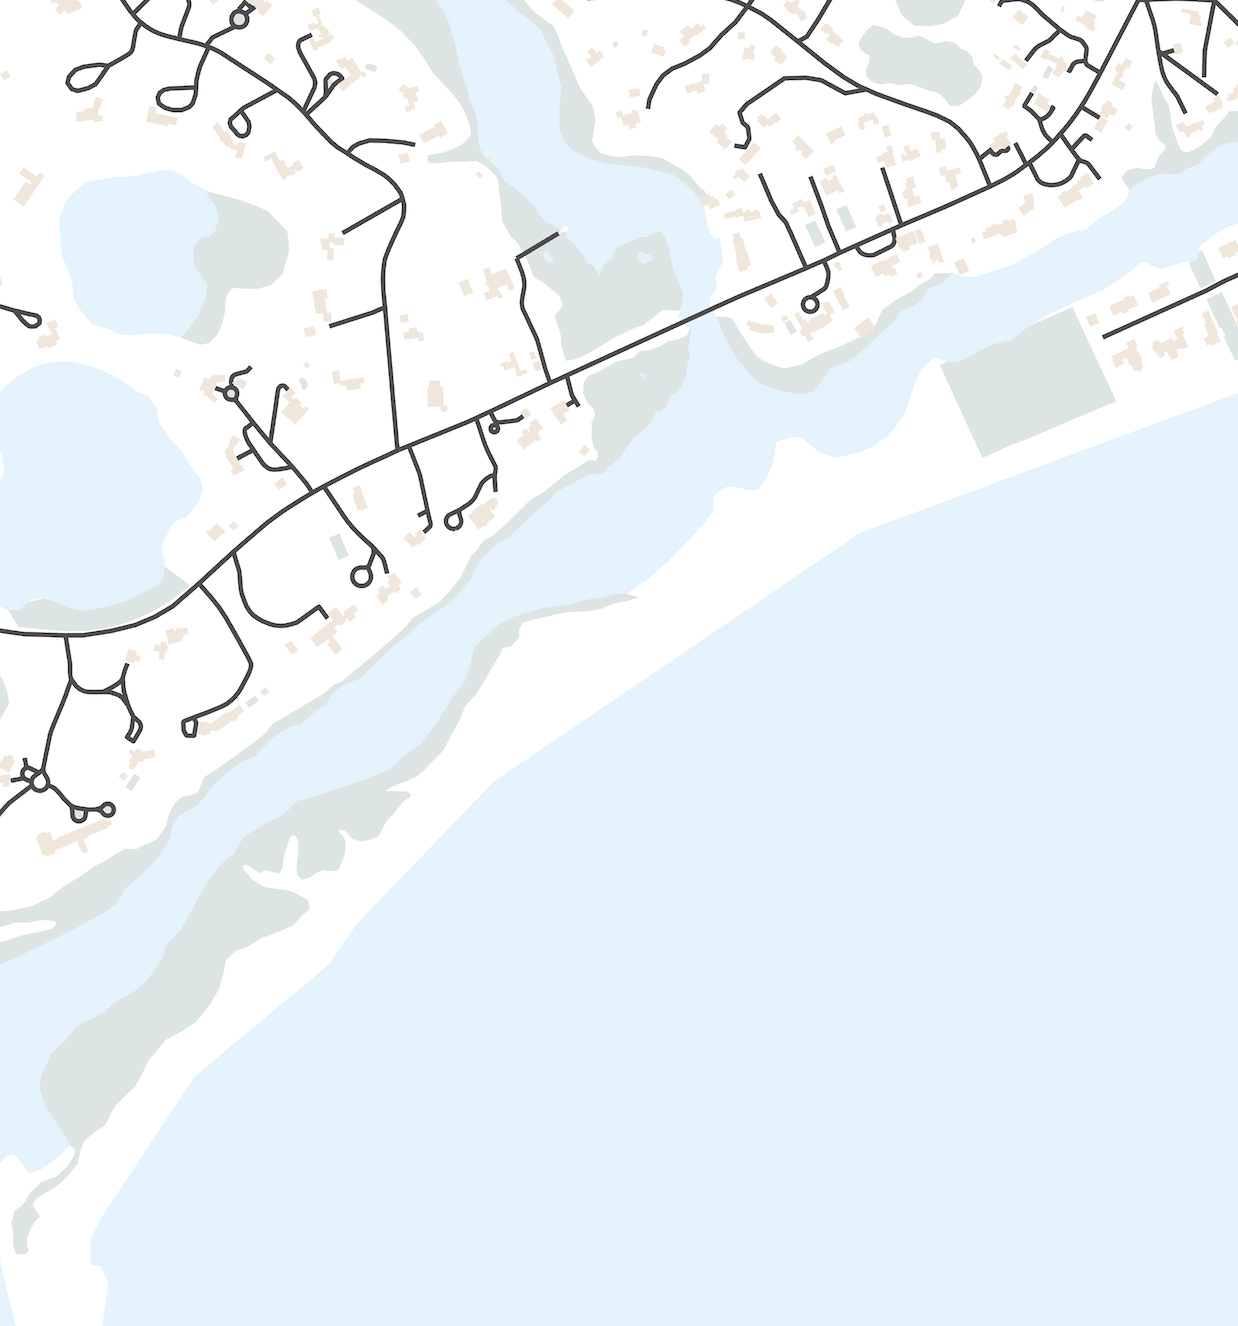 Craigville Beach Map Print